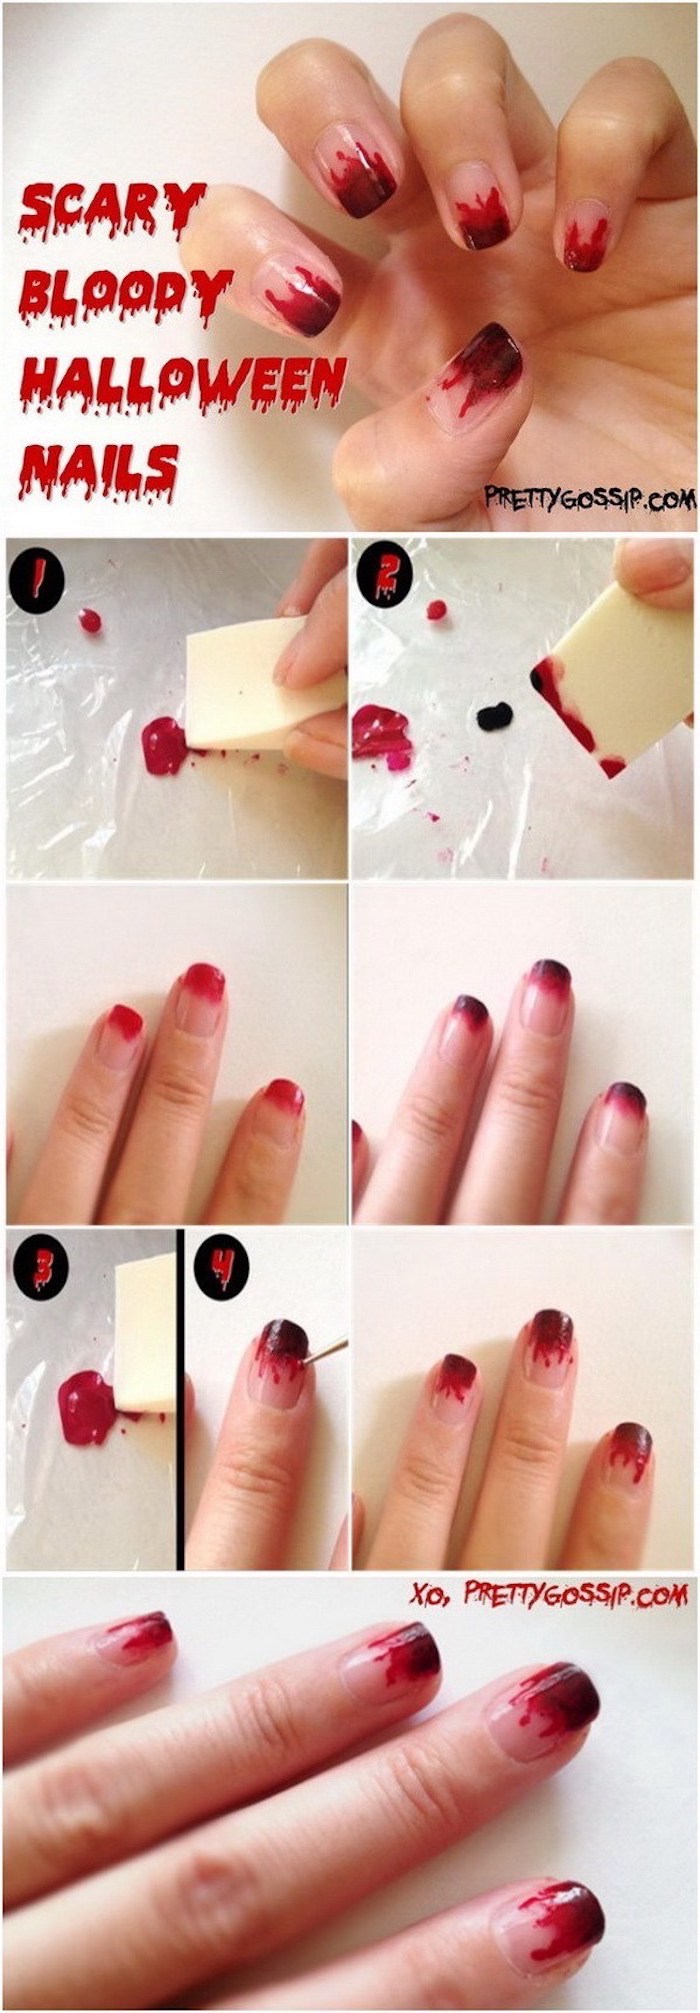 Inspiring Cool Halloween Nails Blood Pics